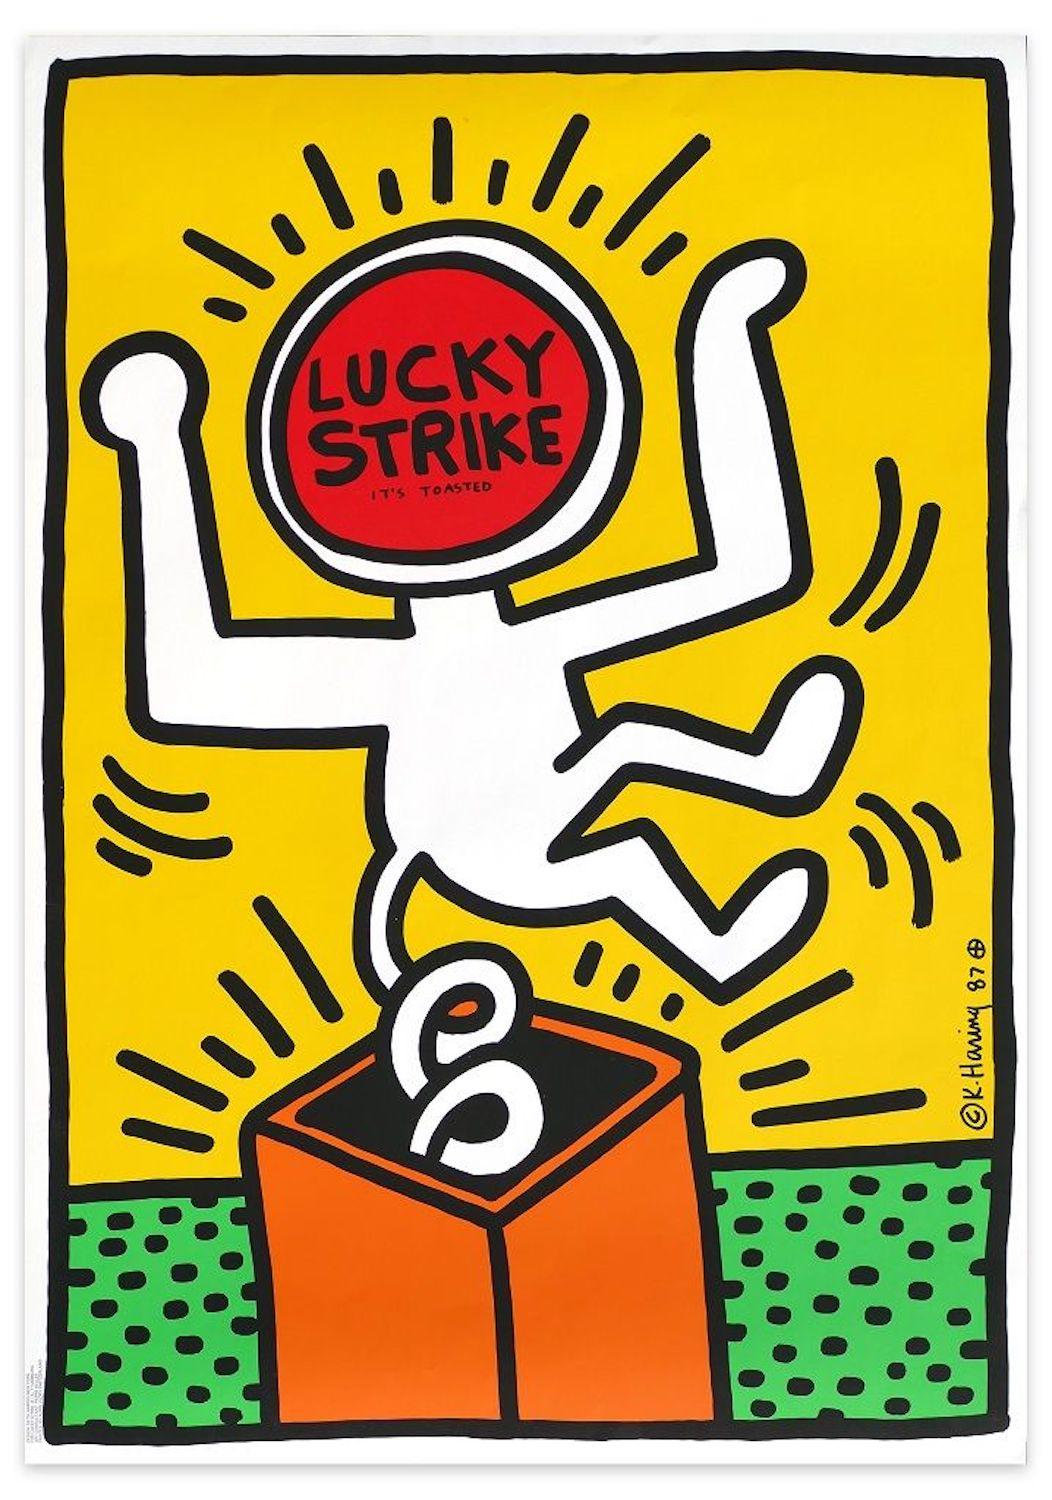 lucky strikes toasted